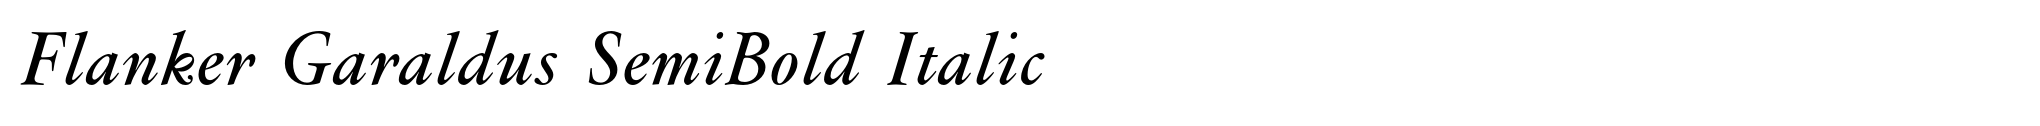 Flanker Garaldus SemiBold Italic image